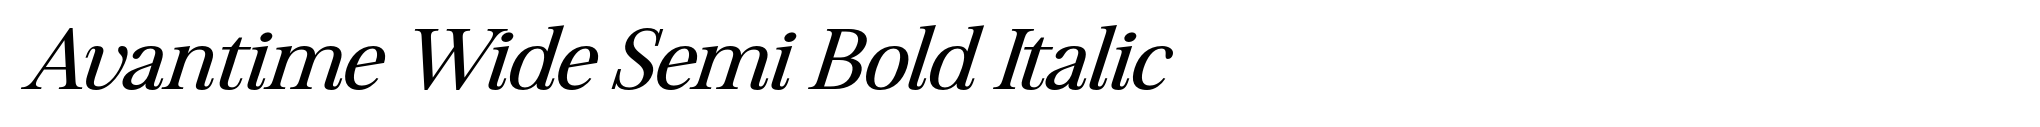 Avantime Wide Semi Bold Italic image